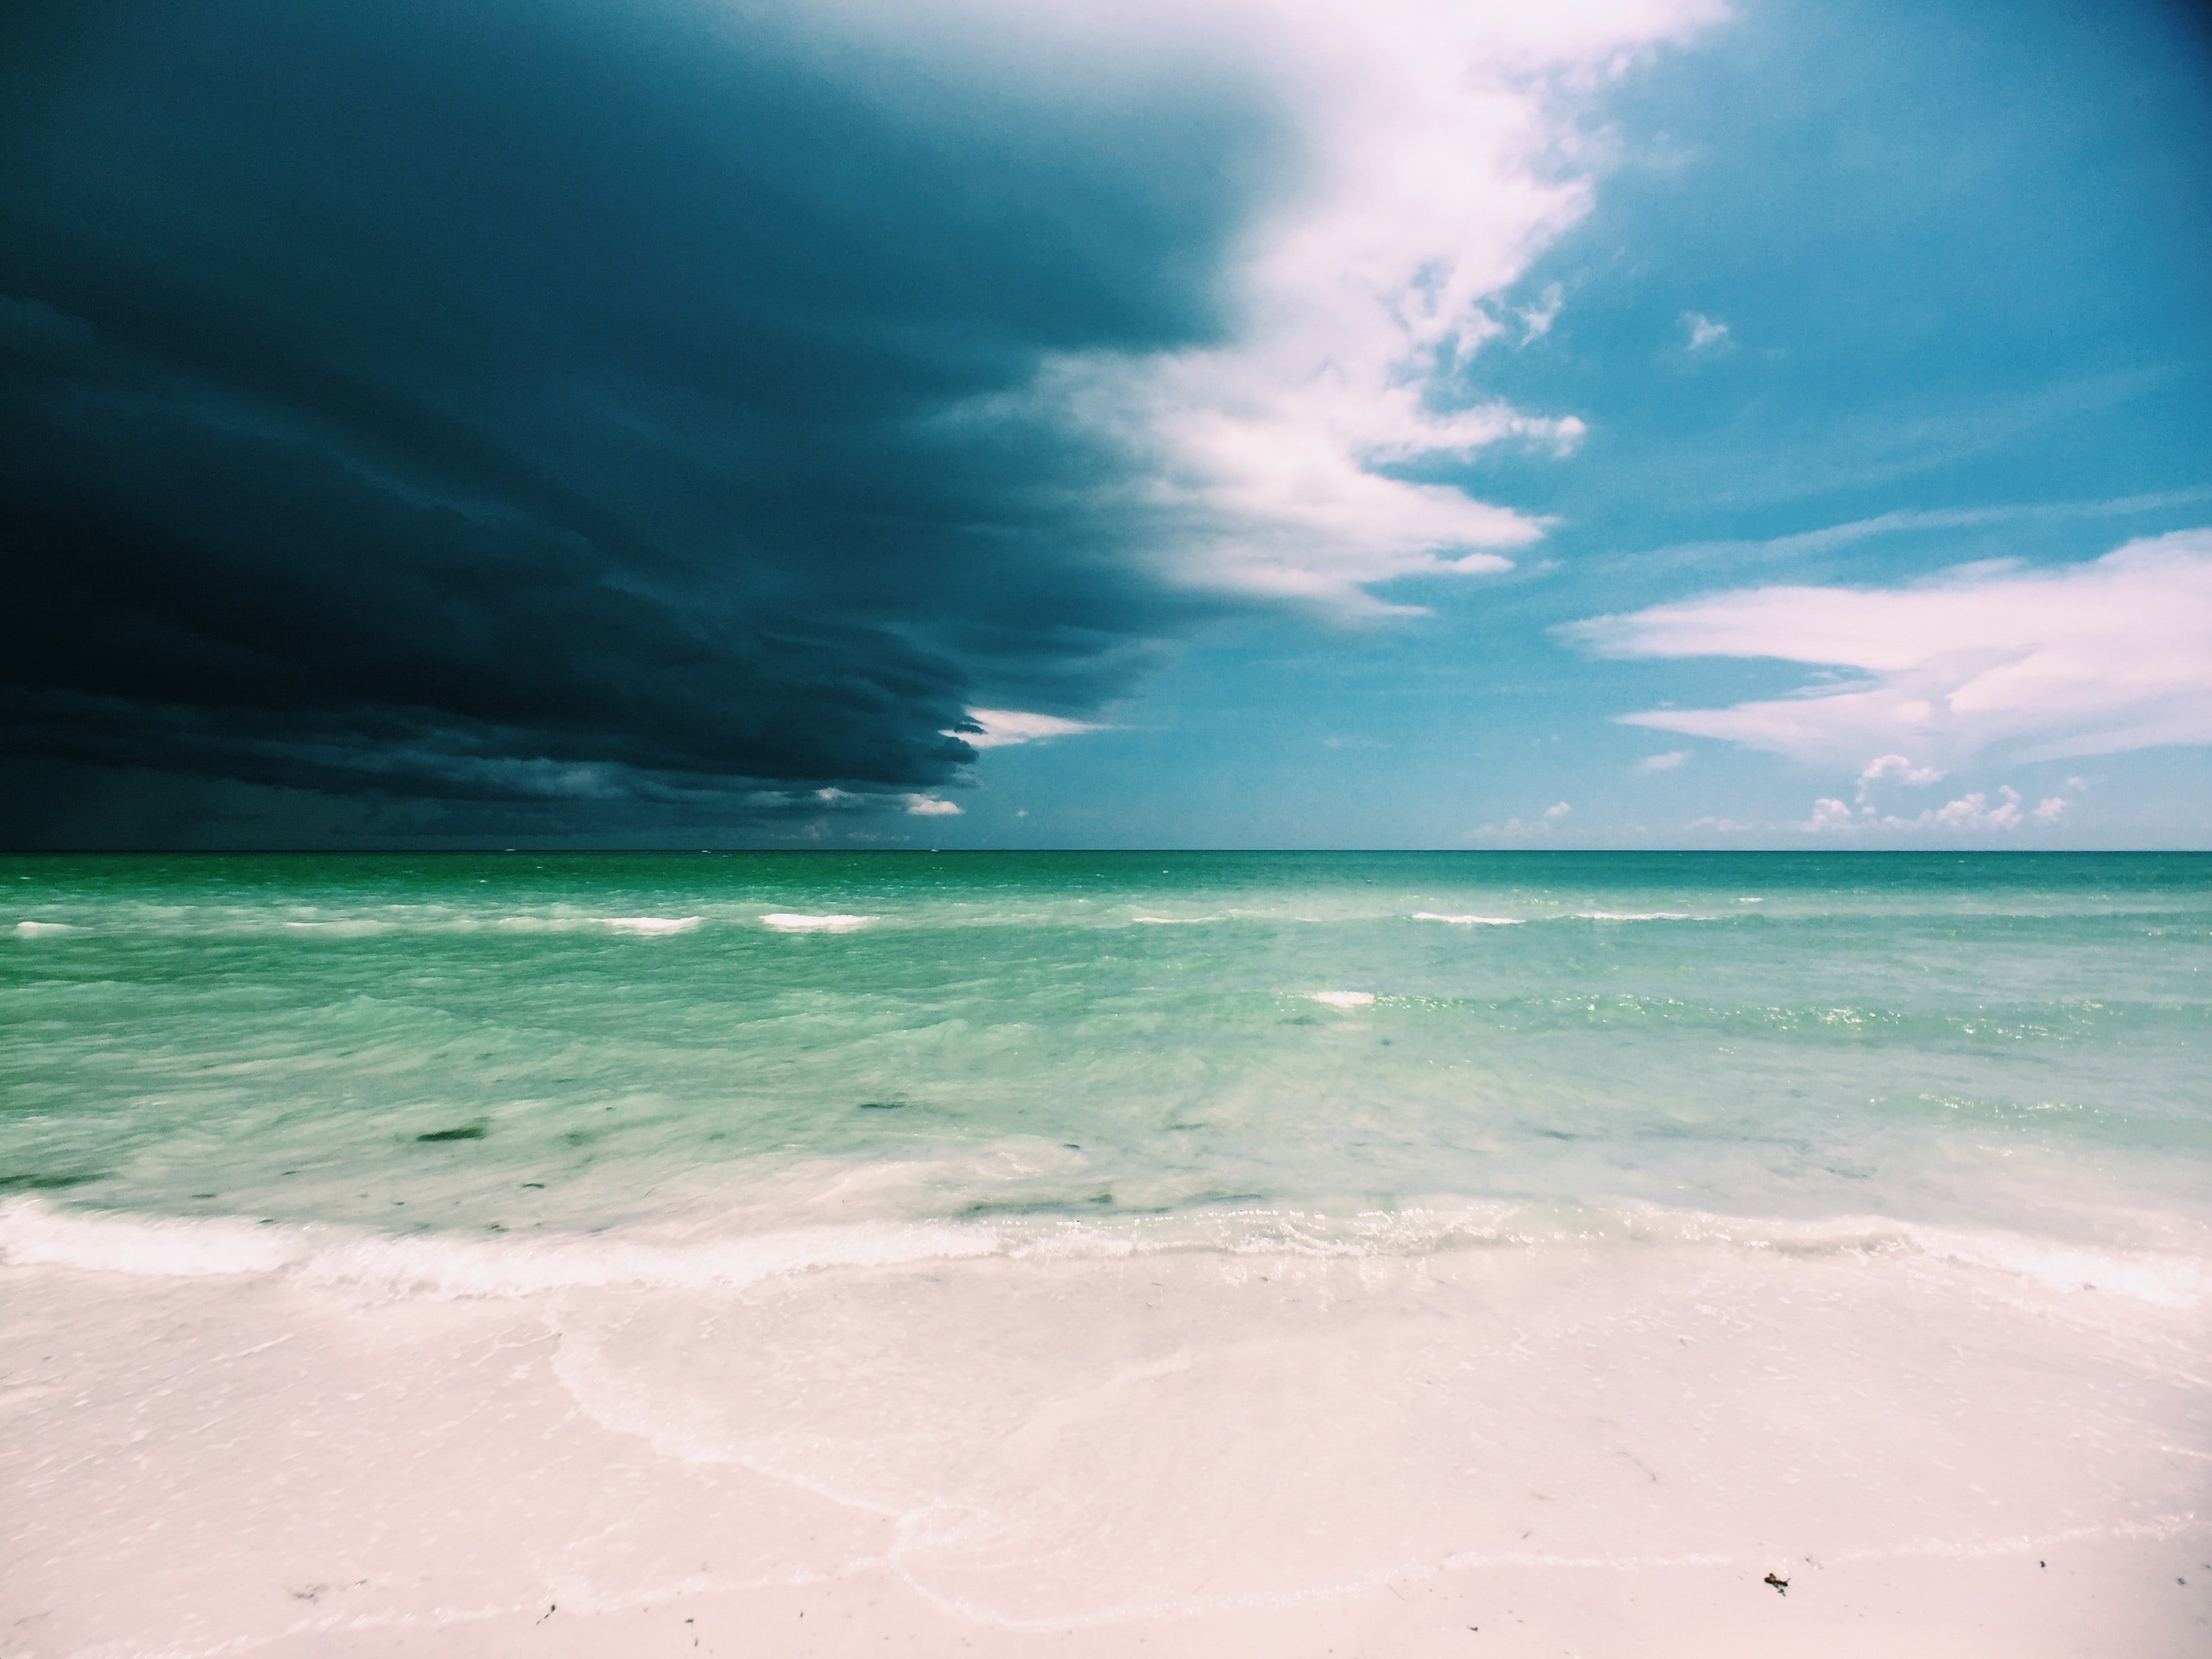 storm approaching florida beach